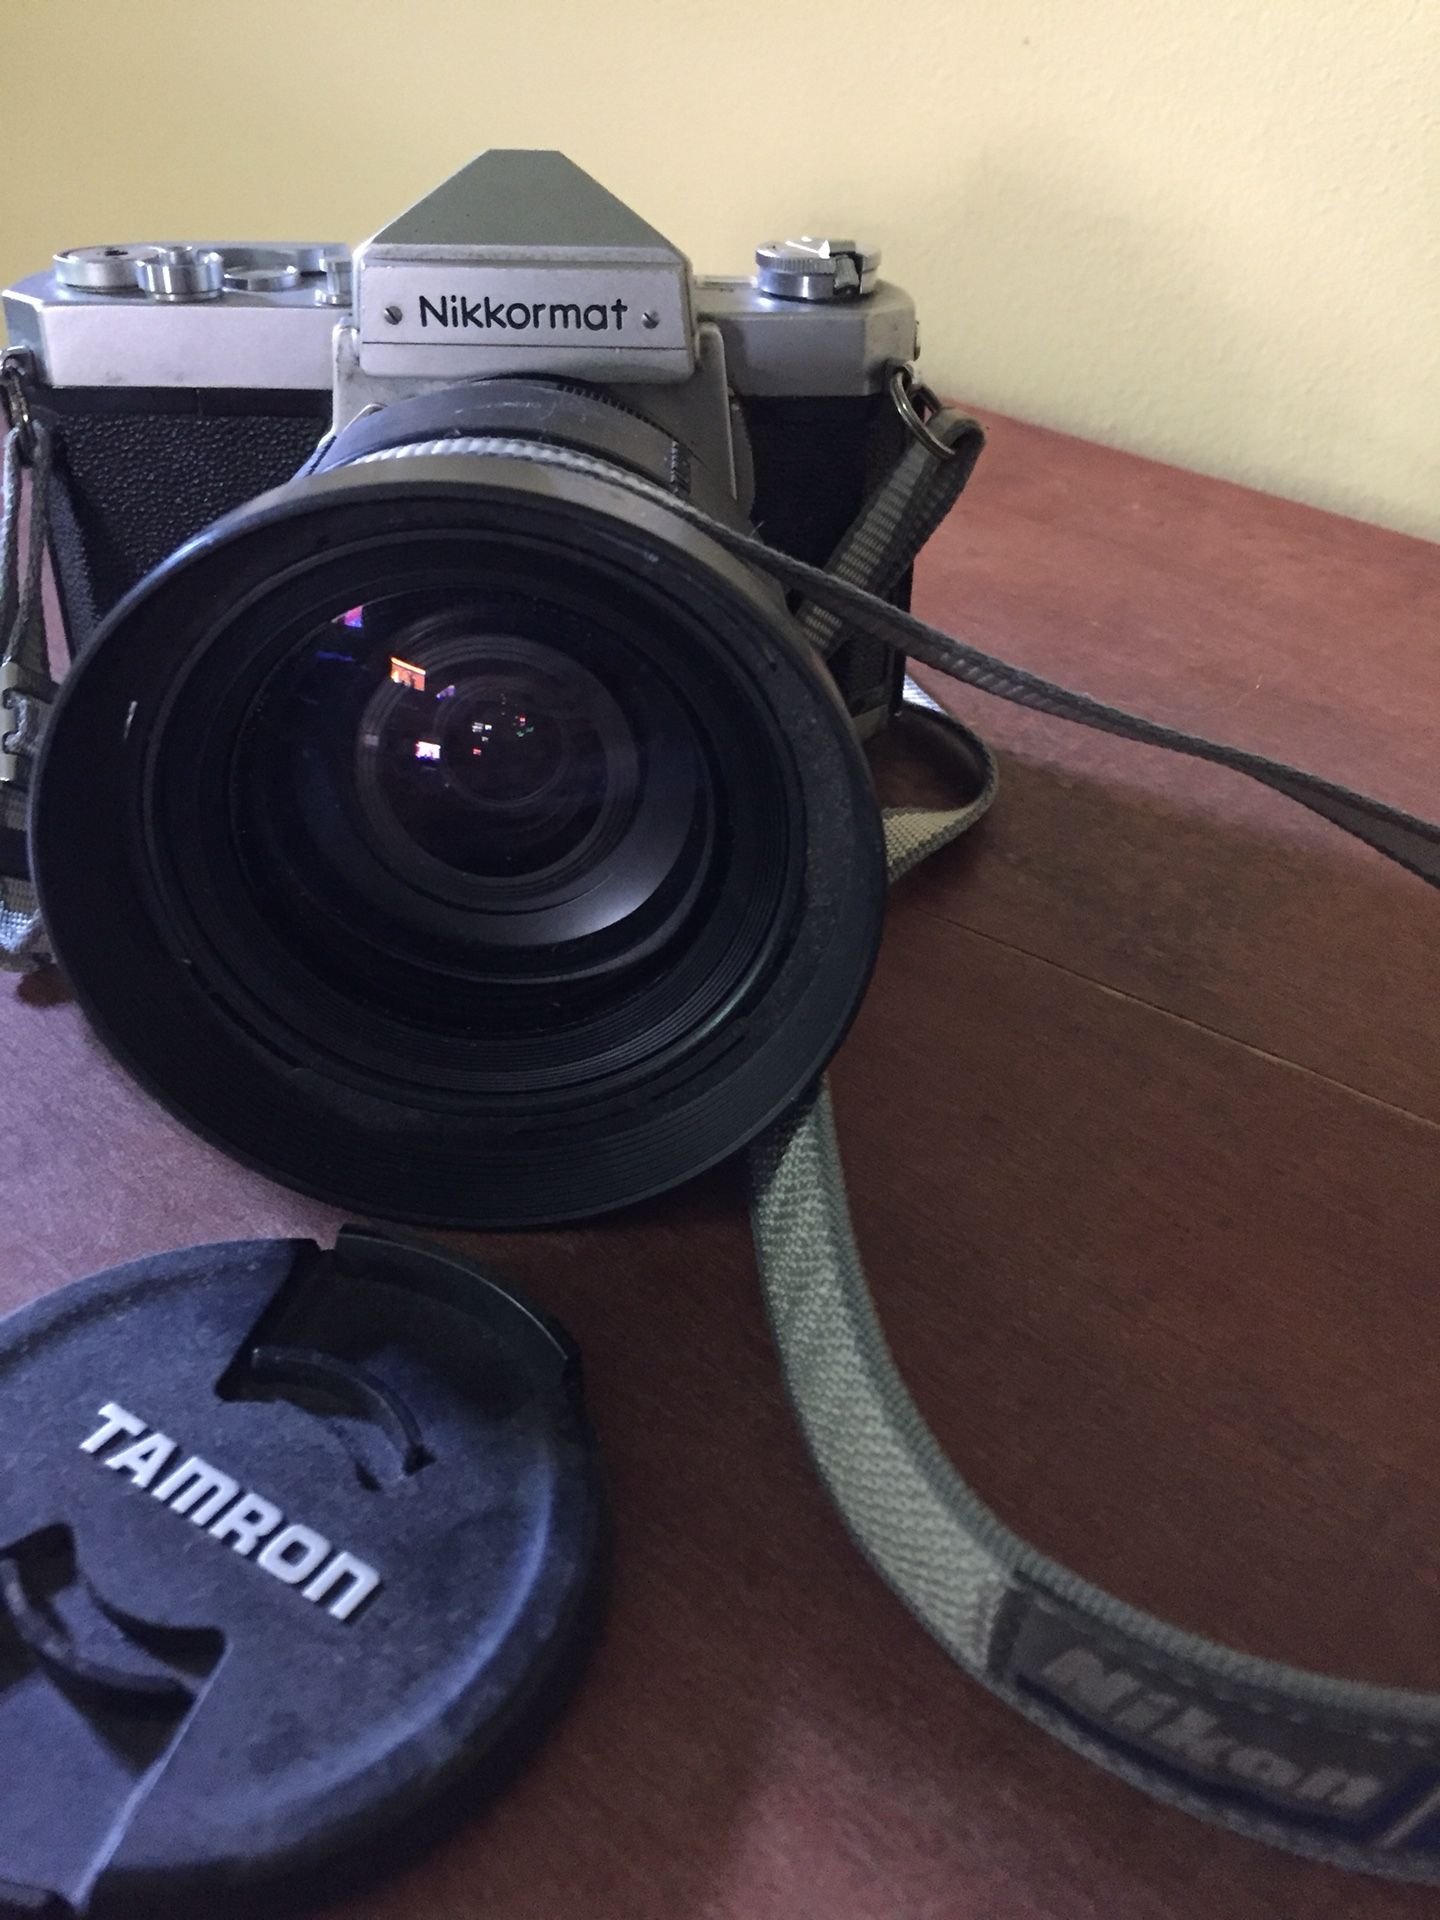 Nikkormat SLR film camera with Tamron Portrait Lens